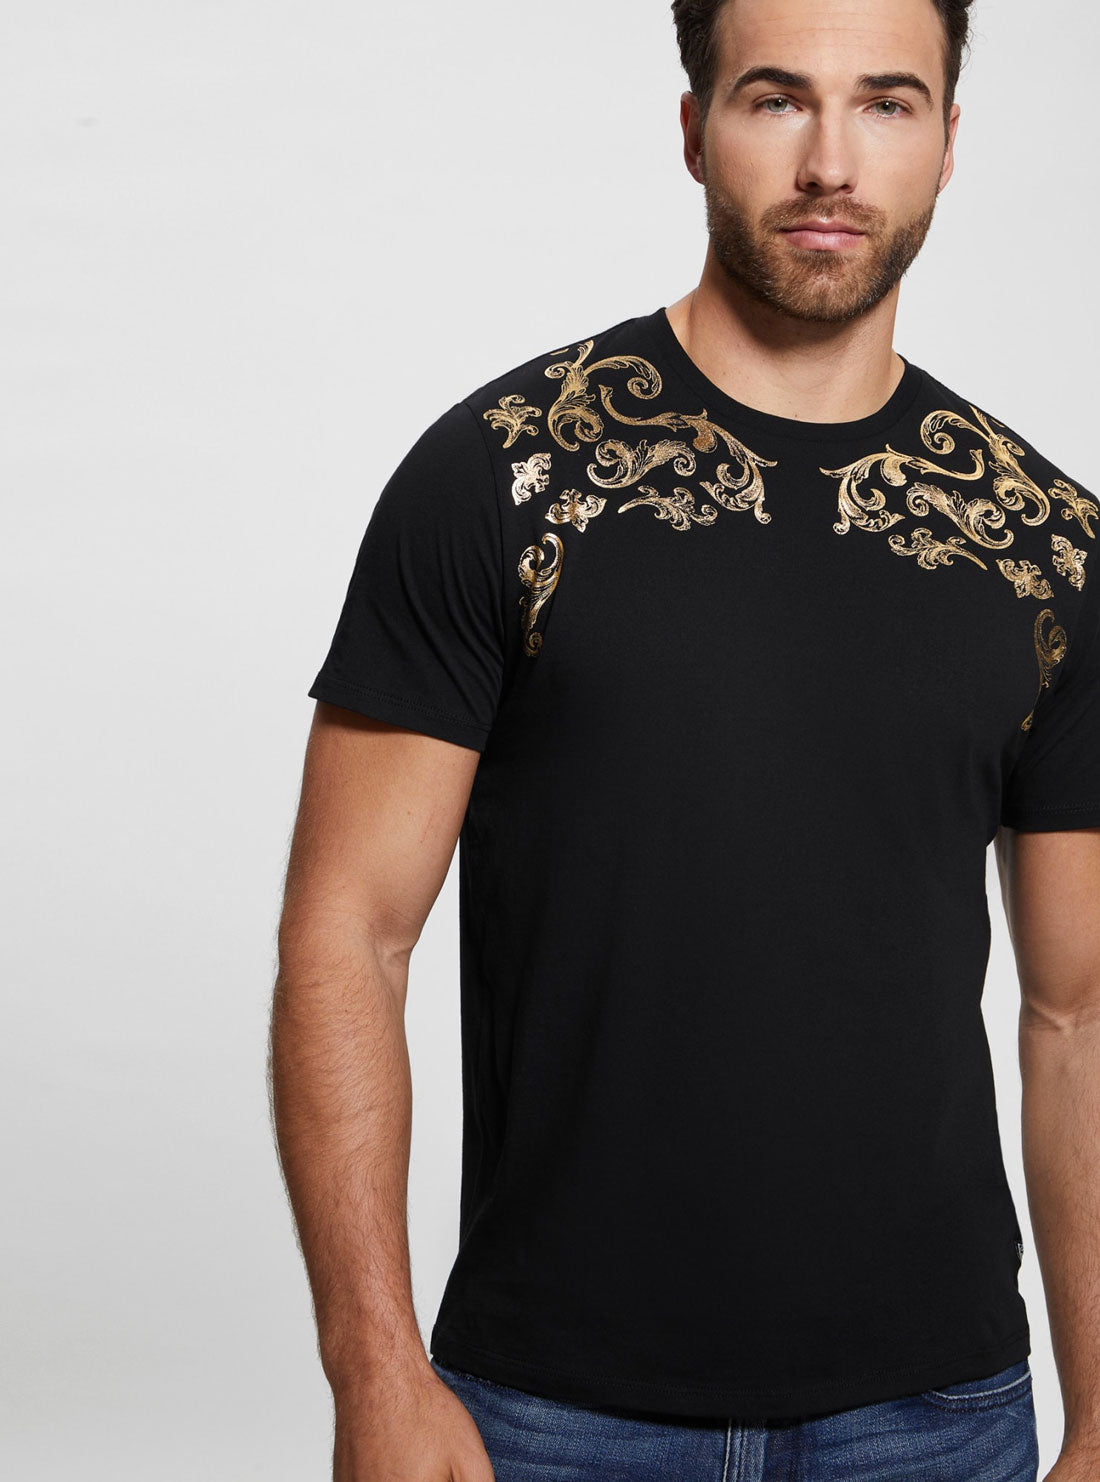 GUESS Black Gold Barque T-Shirt detailv iew